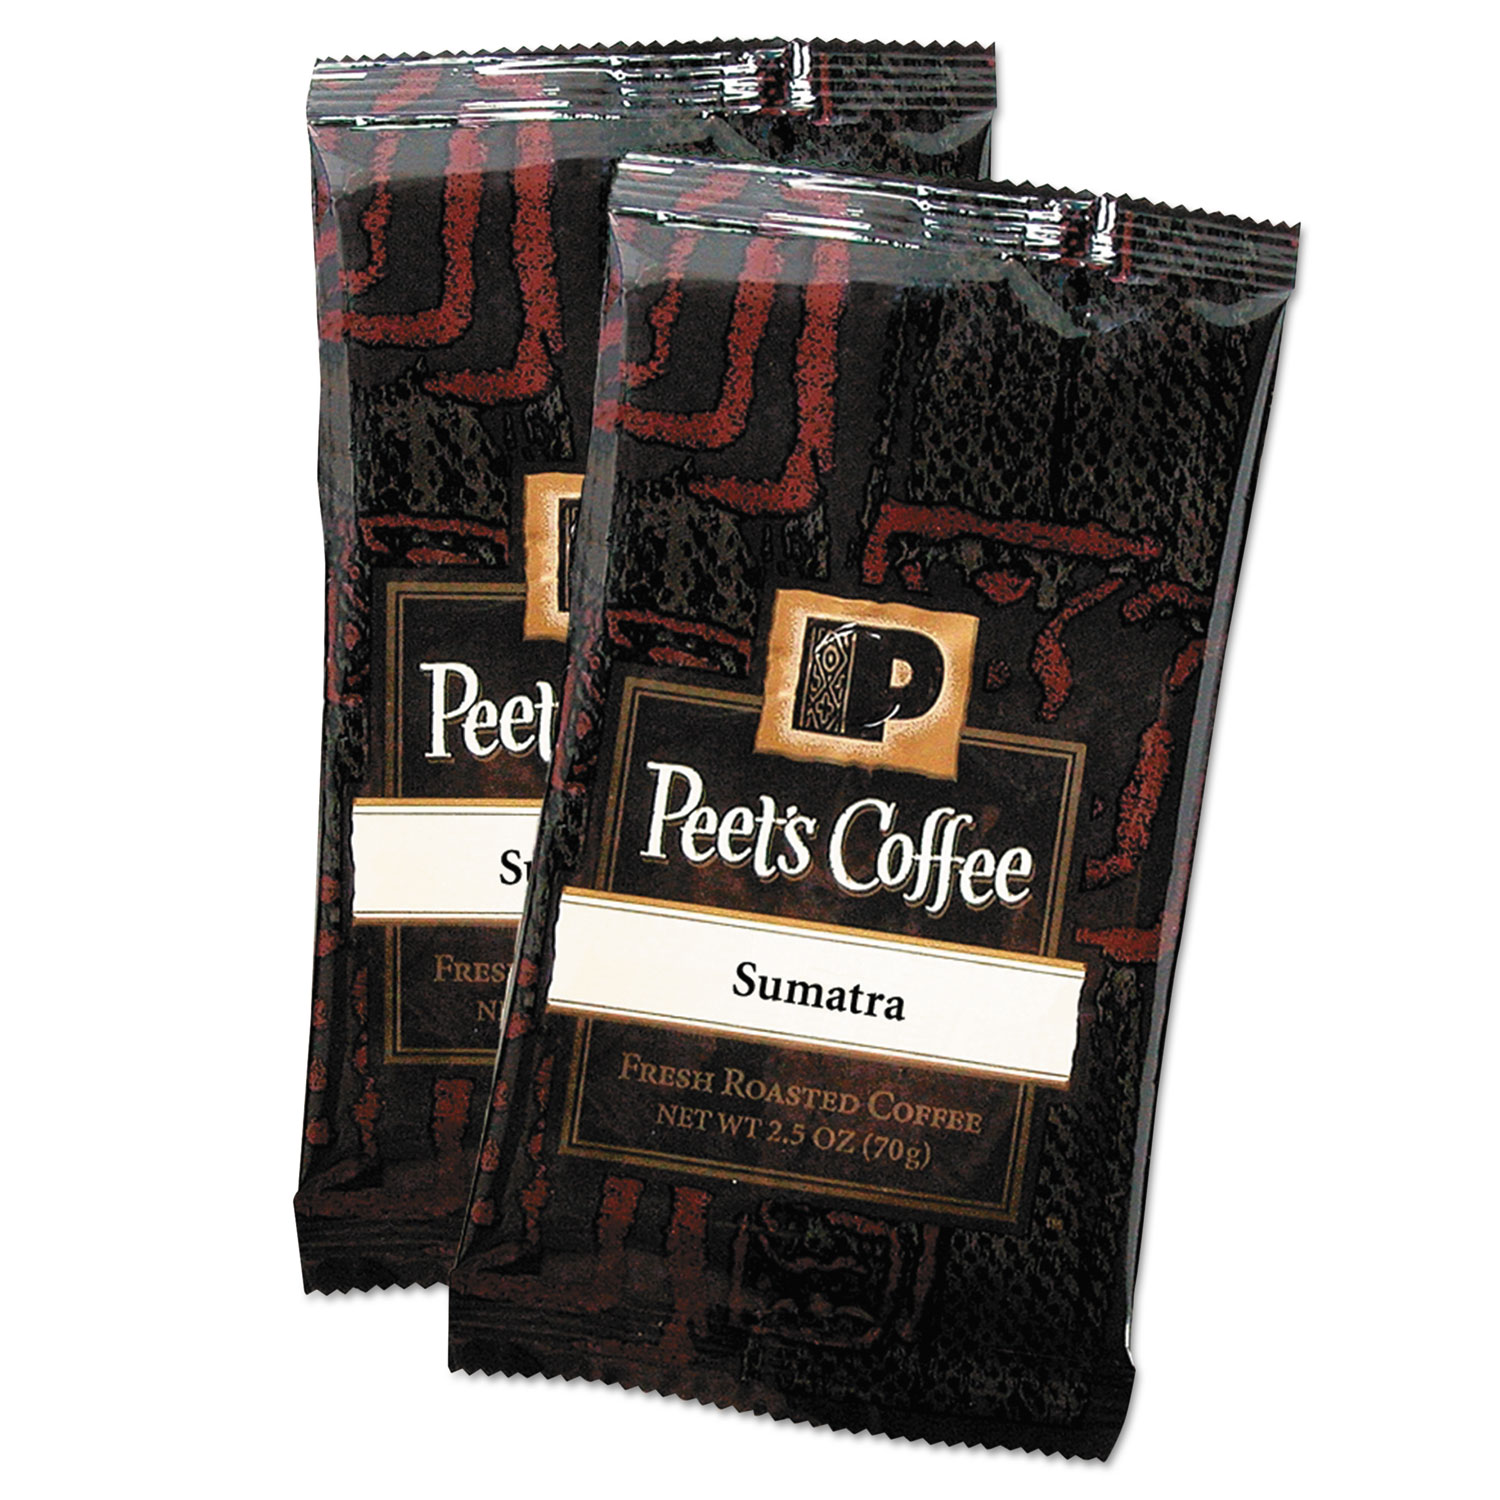  Peet's Coffee & Tea 504917 Coffee Portion Packs, Sumatra, 2.5 oz Frack Pack, 18/Box (PEE504917) 